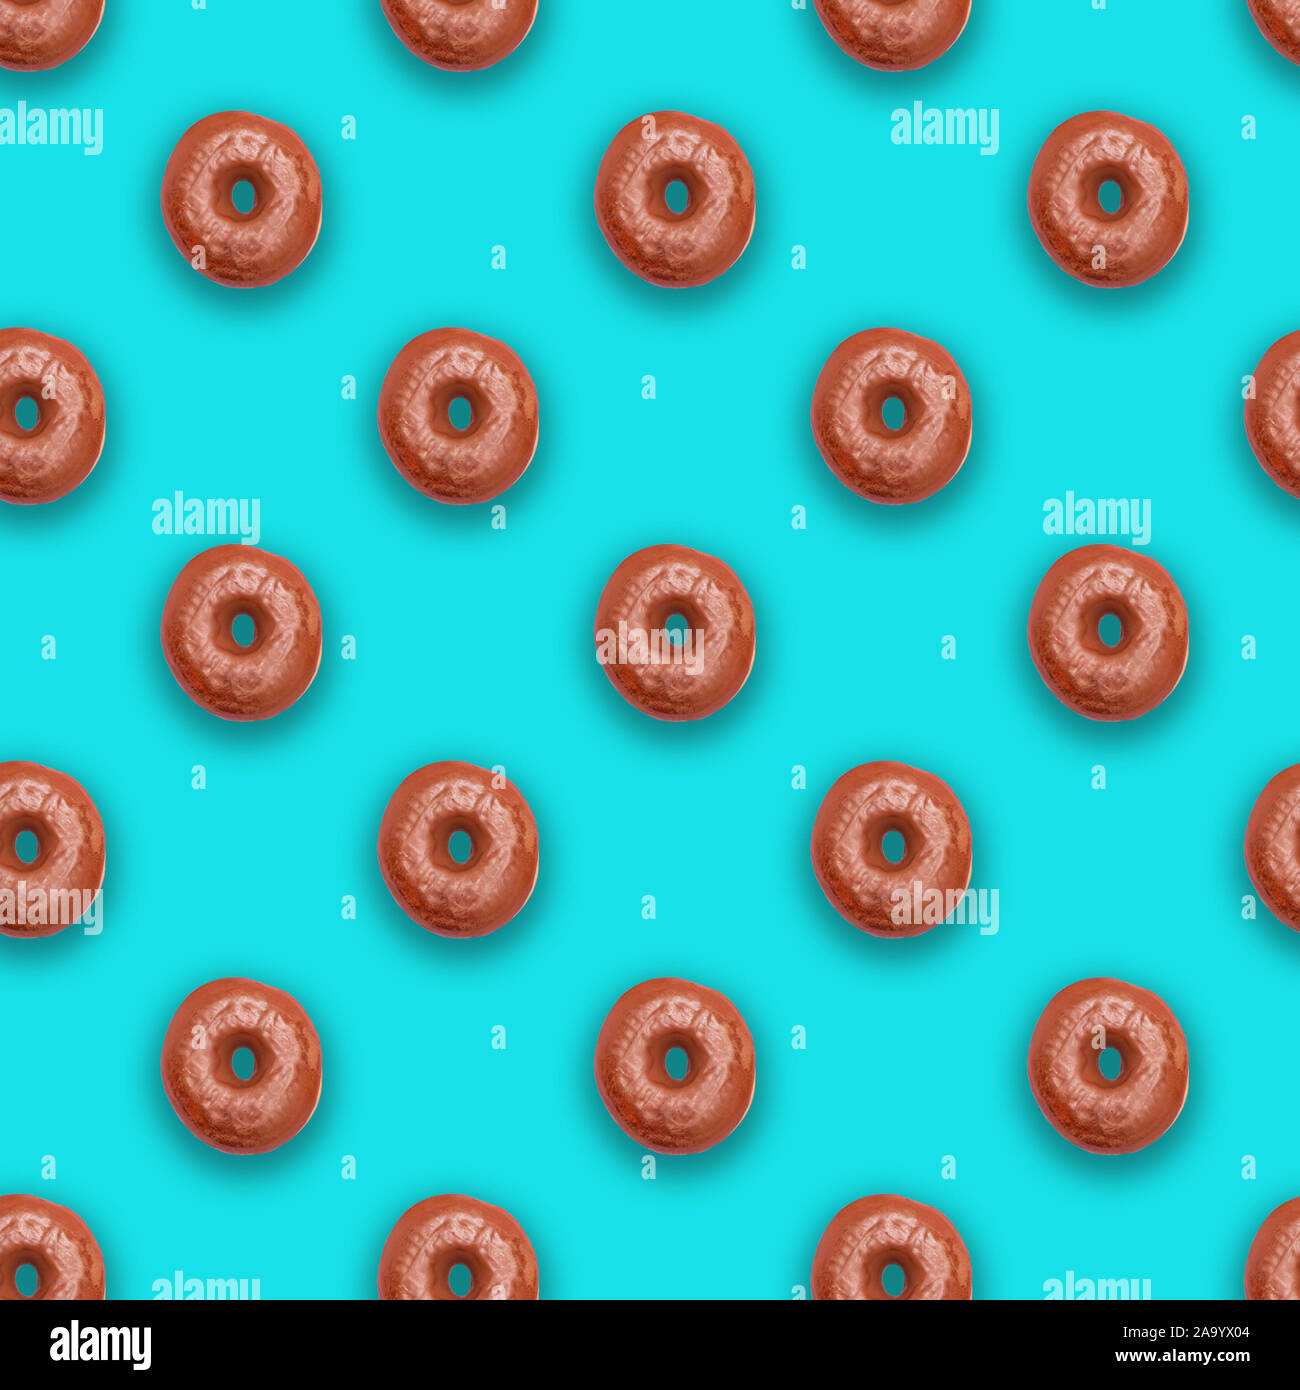 Chocolate glazed doughnuts (donuts) on soft turquoise background Stock Photo